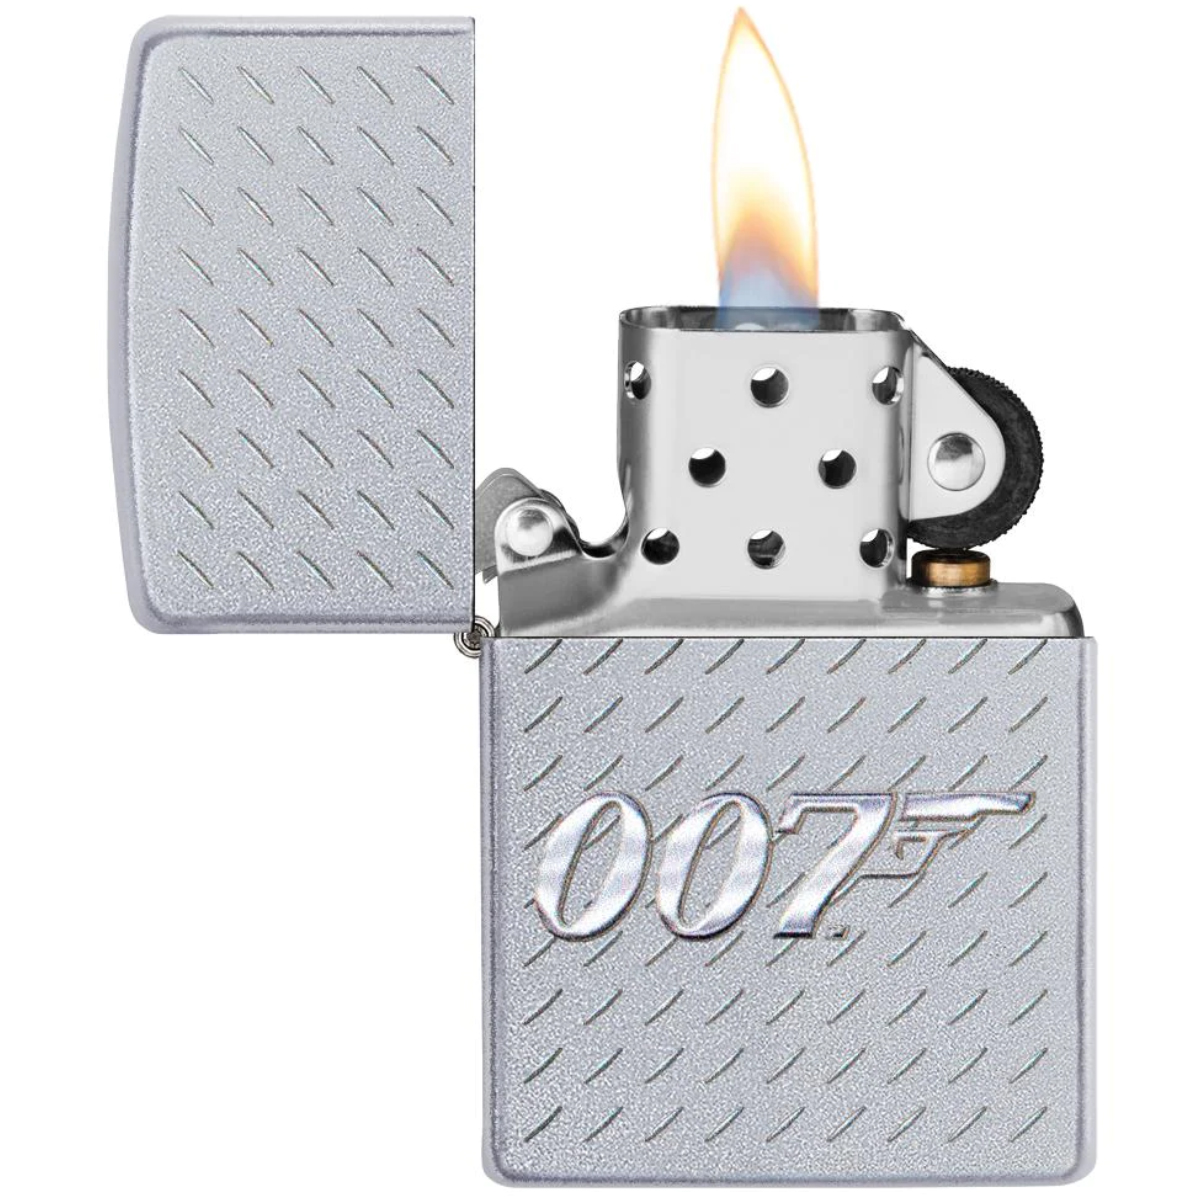 Zippo James Bond 007 lighter